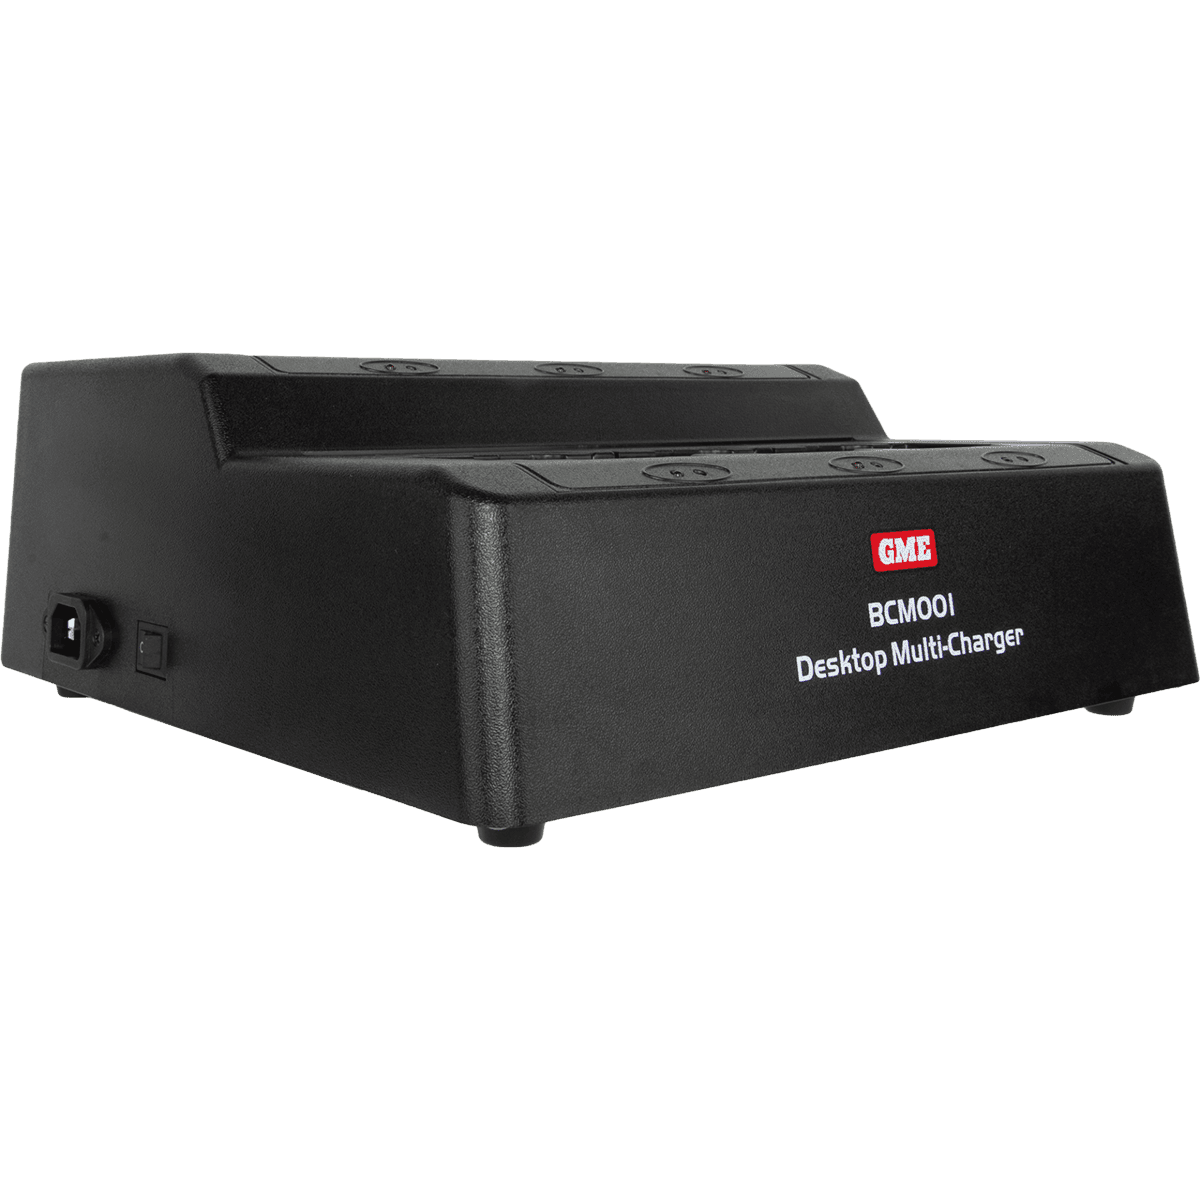 GME BCM001 6 Way Desktop MultiCharger - NZ Offroader